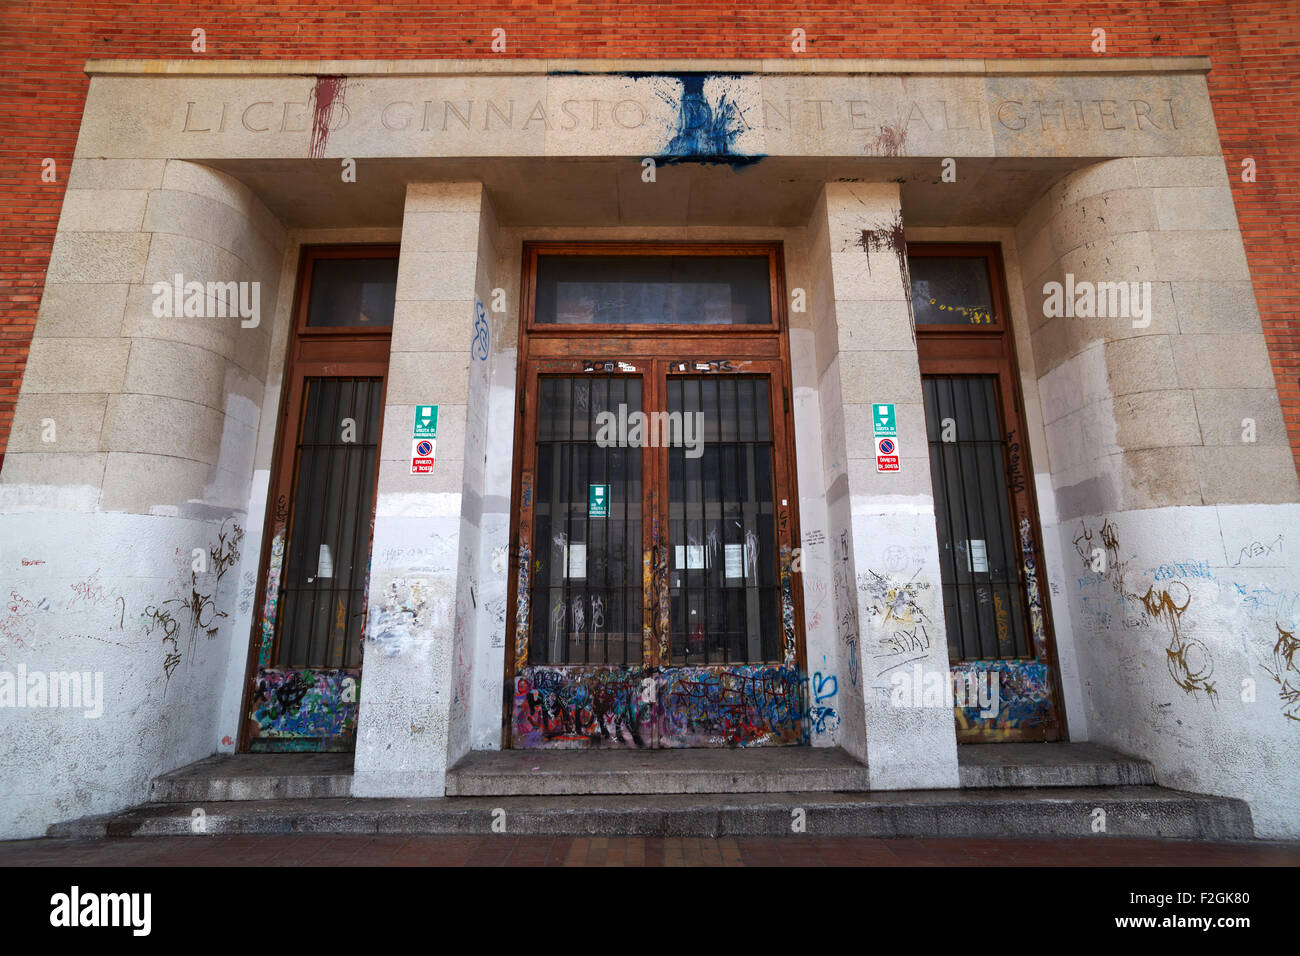 Liceo Ginnasio Dante Alighieri, Trieste - Italian school Stock Photo